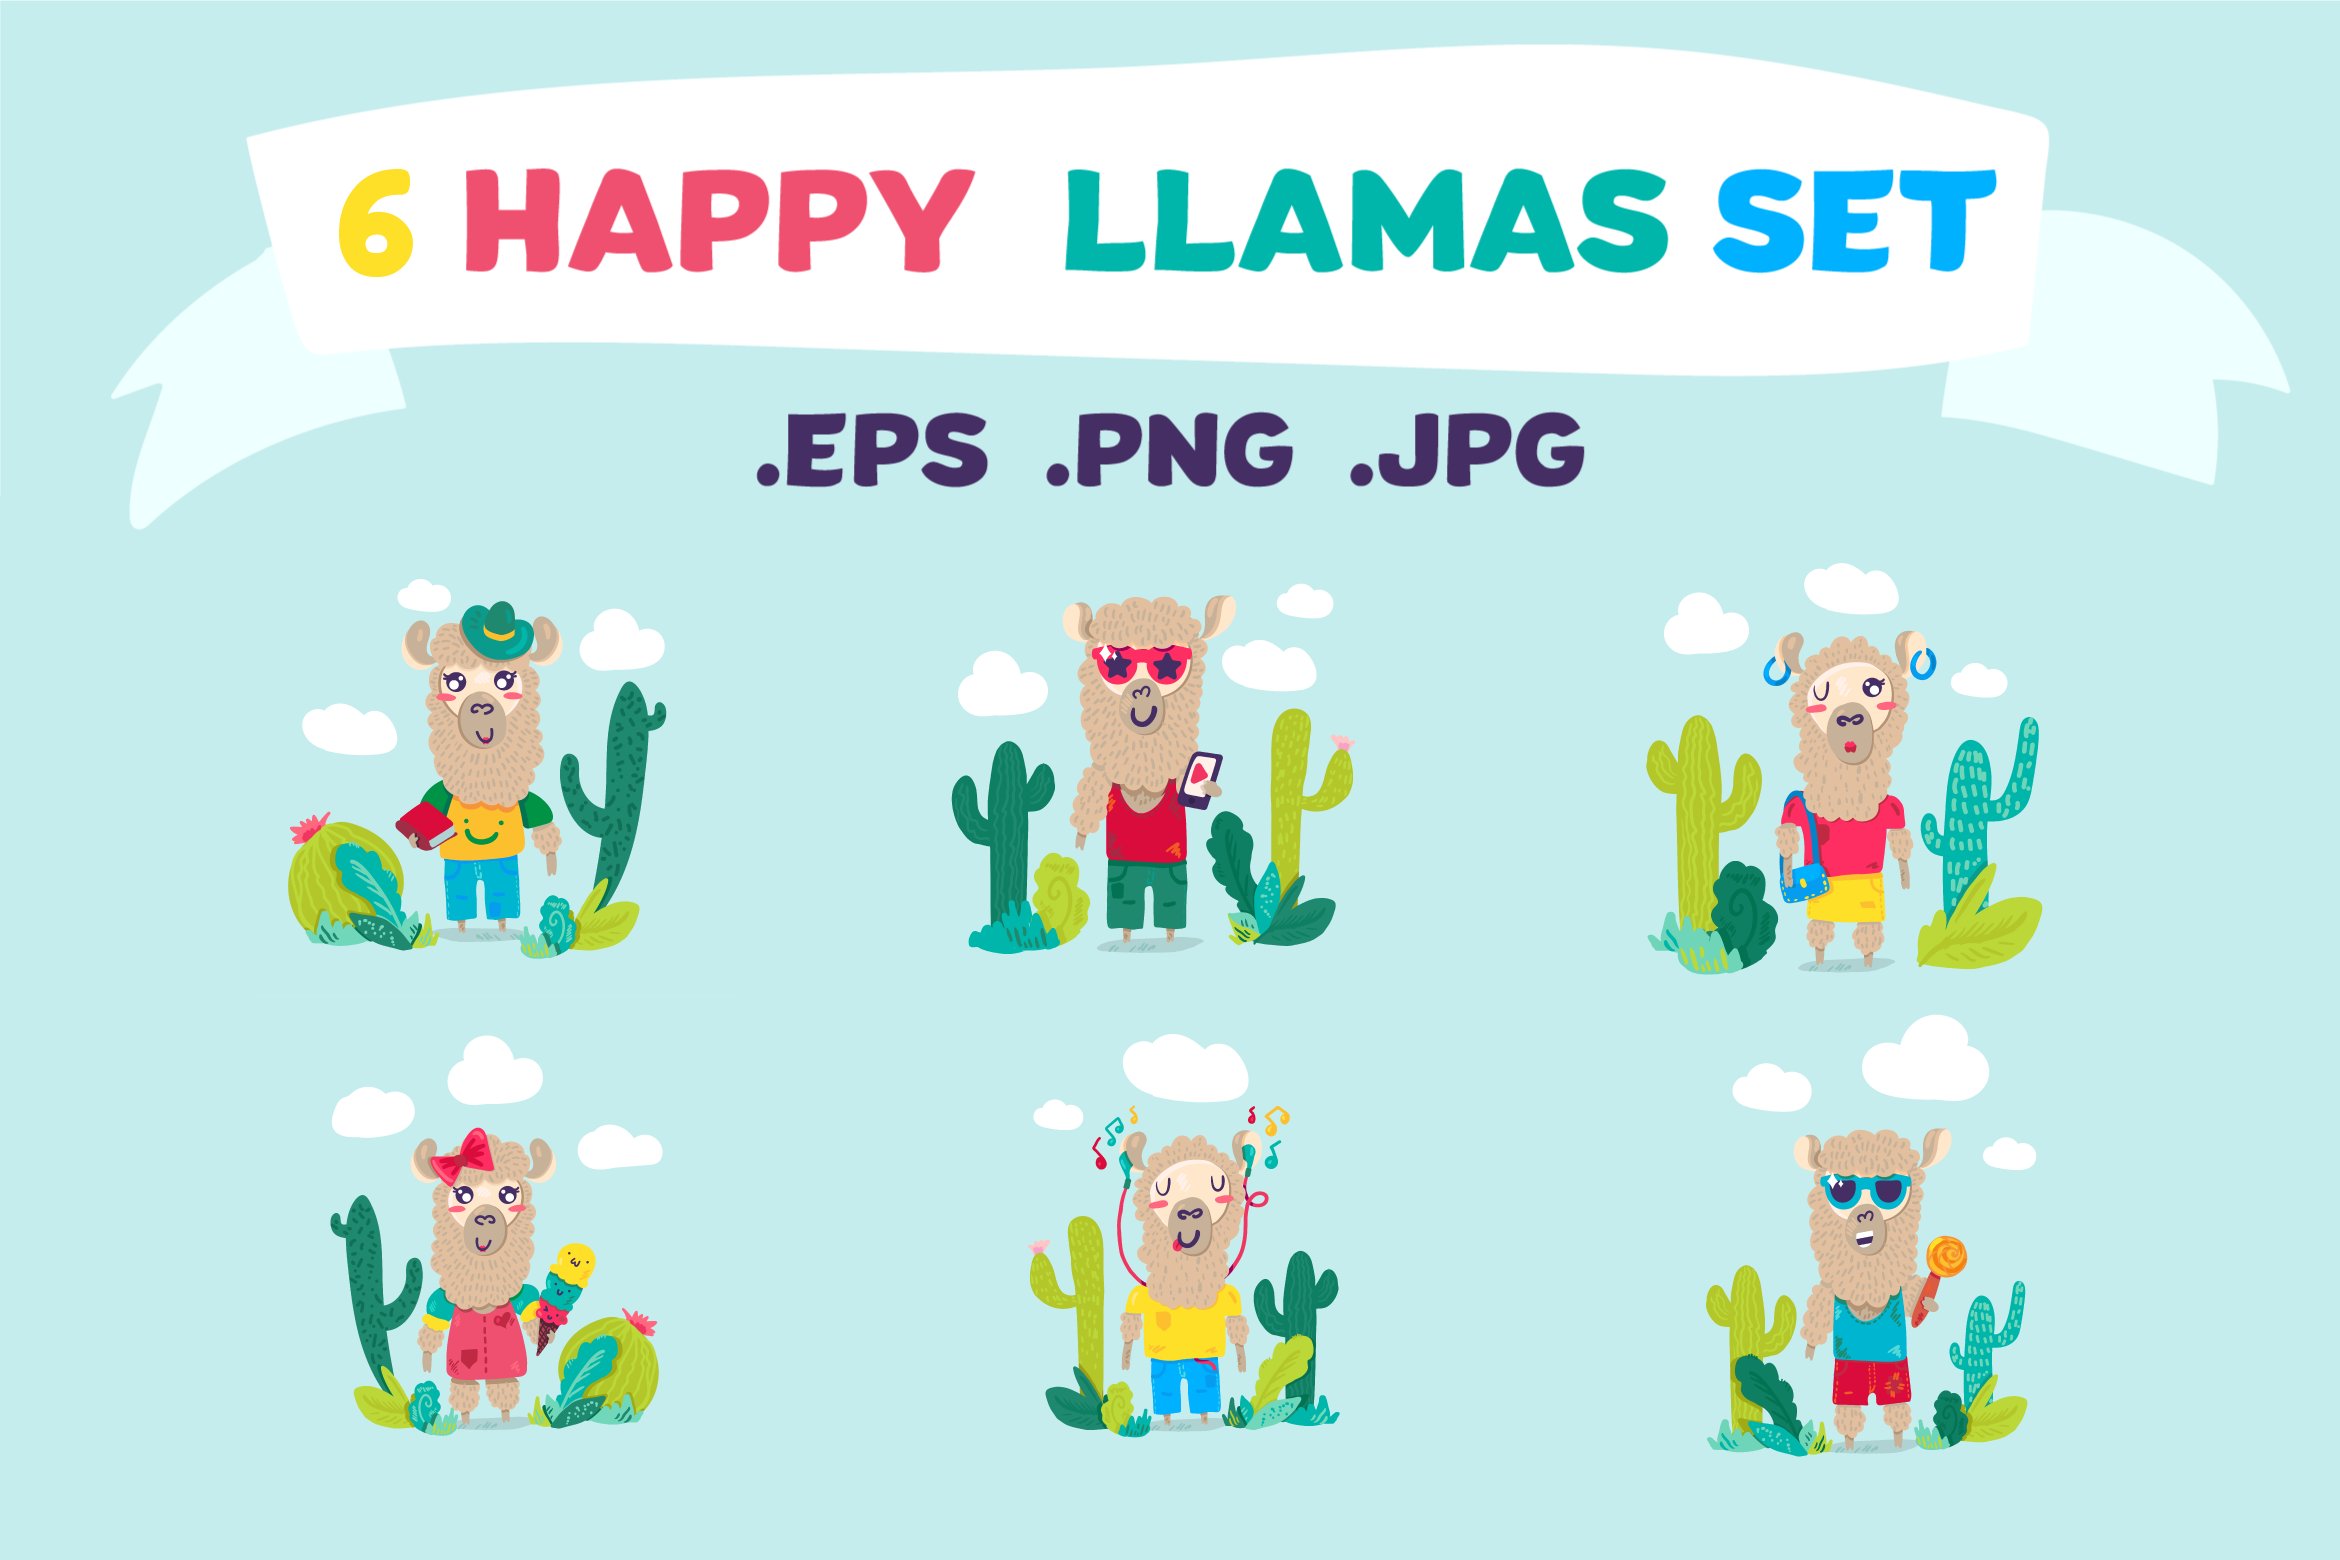 Cute Lama Characters Set cover image.